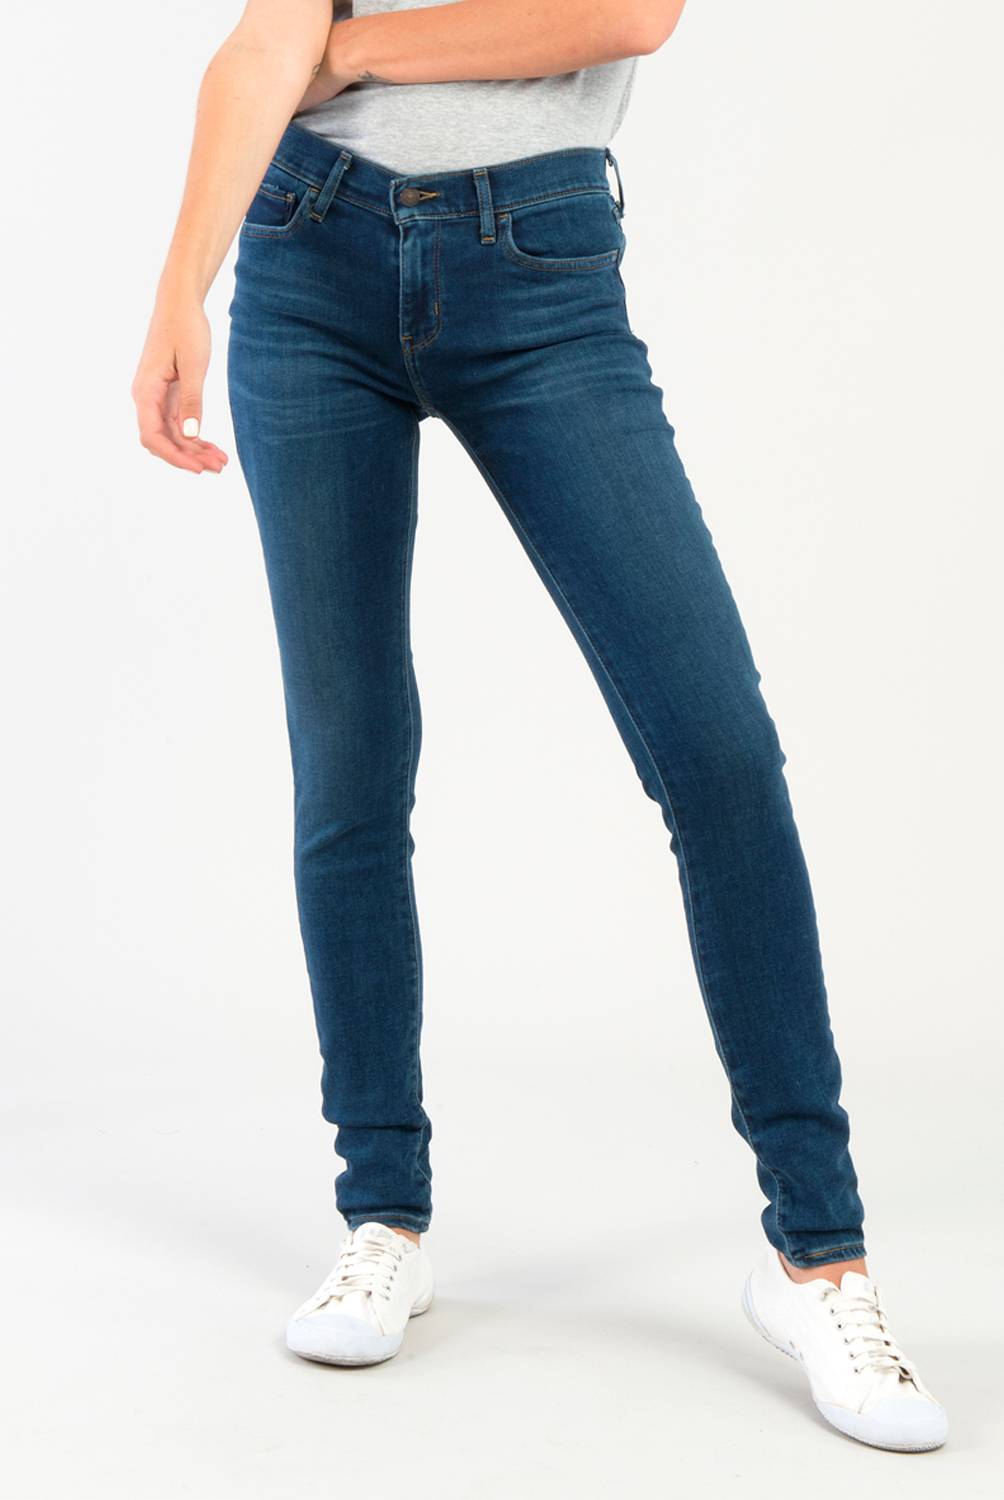 LEVIS - Jeans Skinny Tiro Alto Mujer